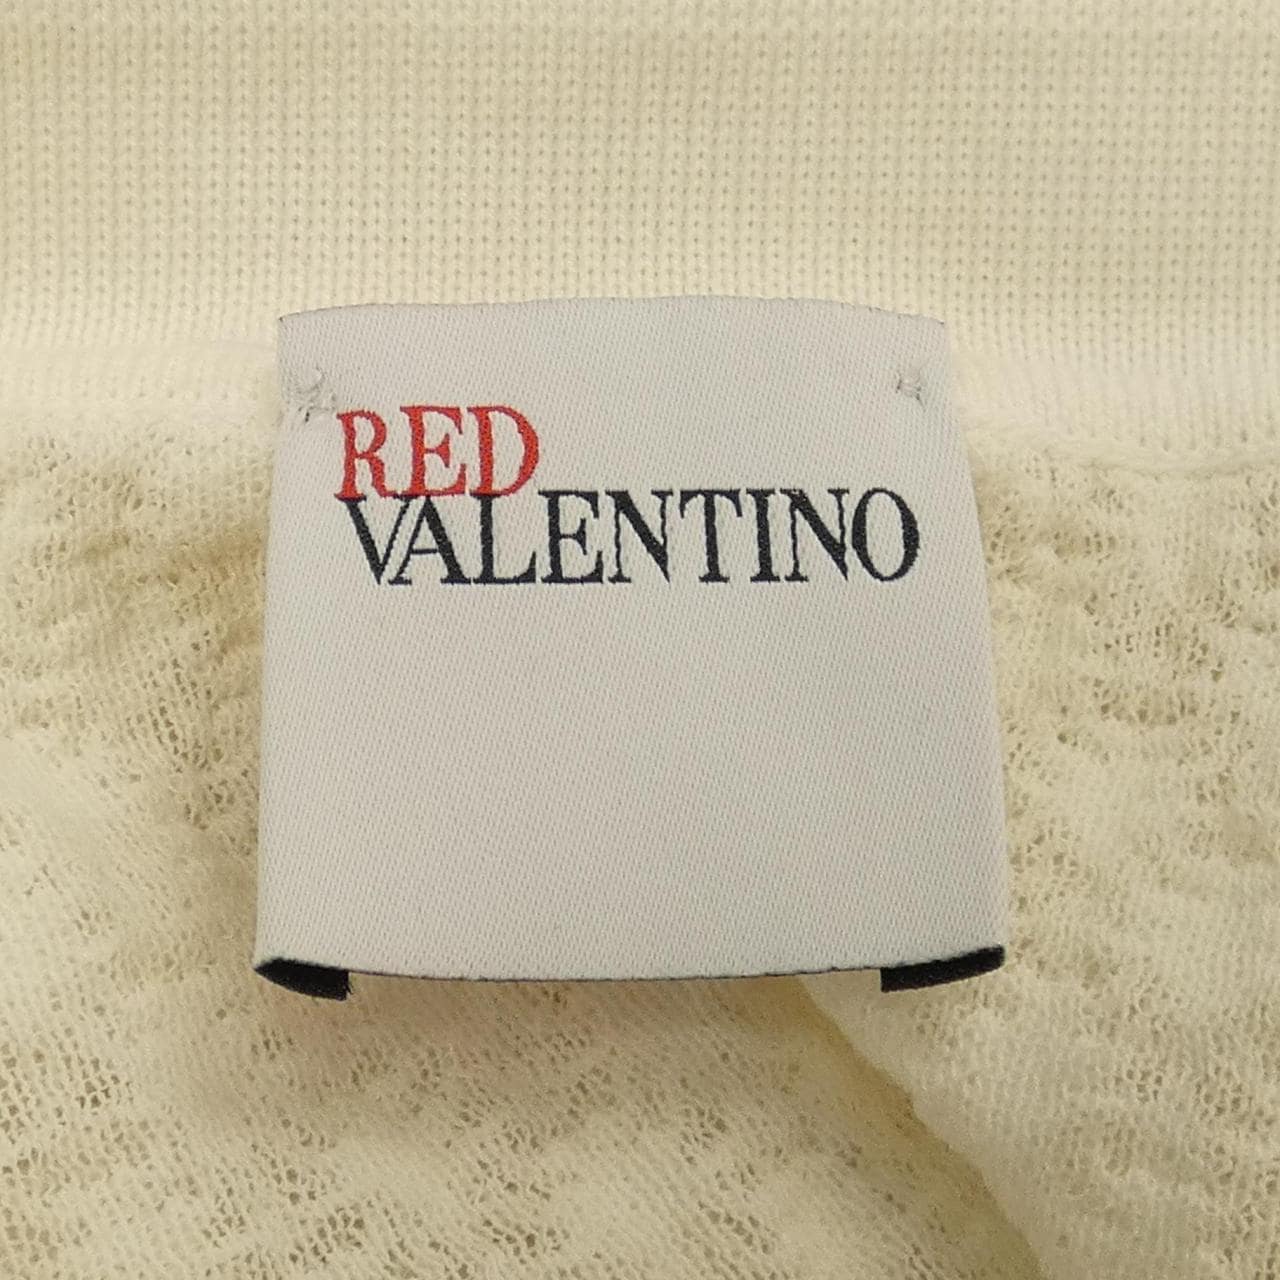 RED VALENTINO RED VALENTINO Tops